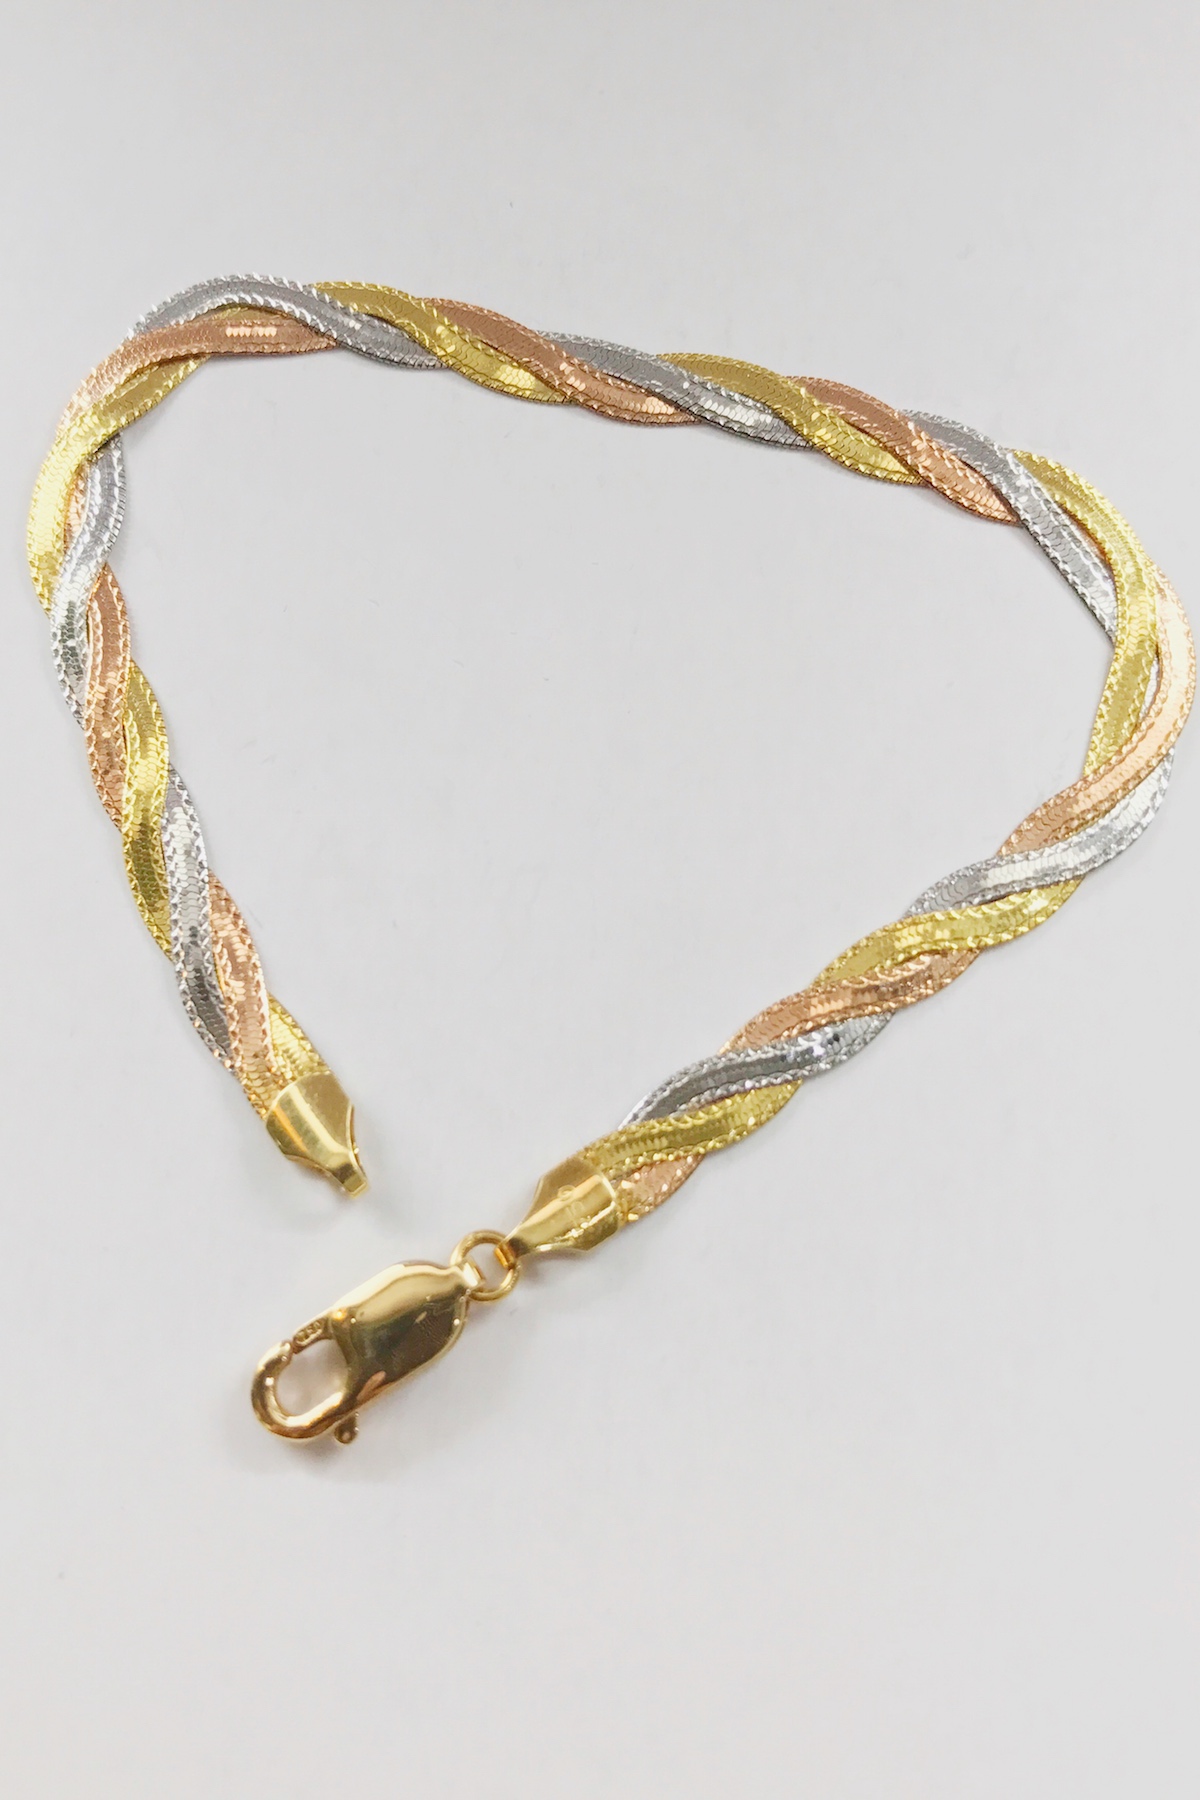 Online Store Philippines. 18k Yellow Gold Bracelet | Jay-Ann Jewelry